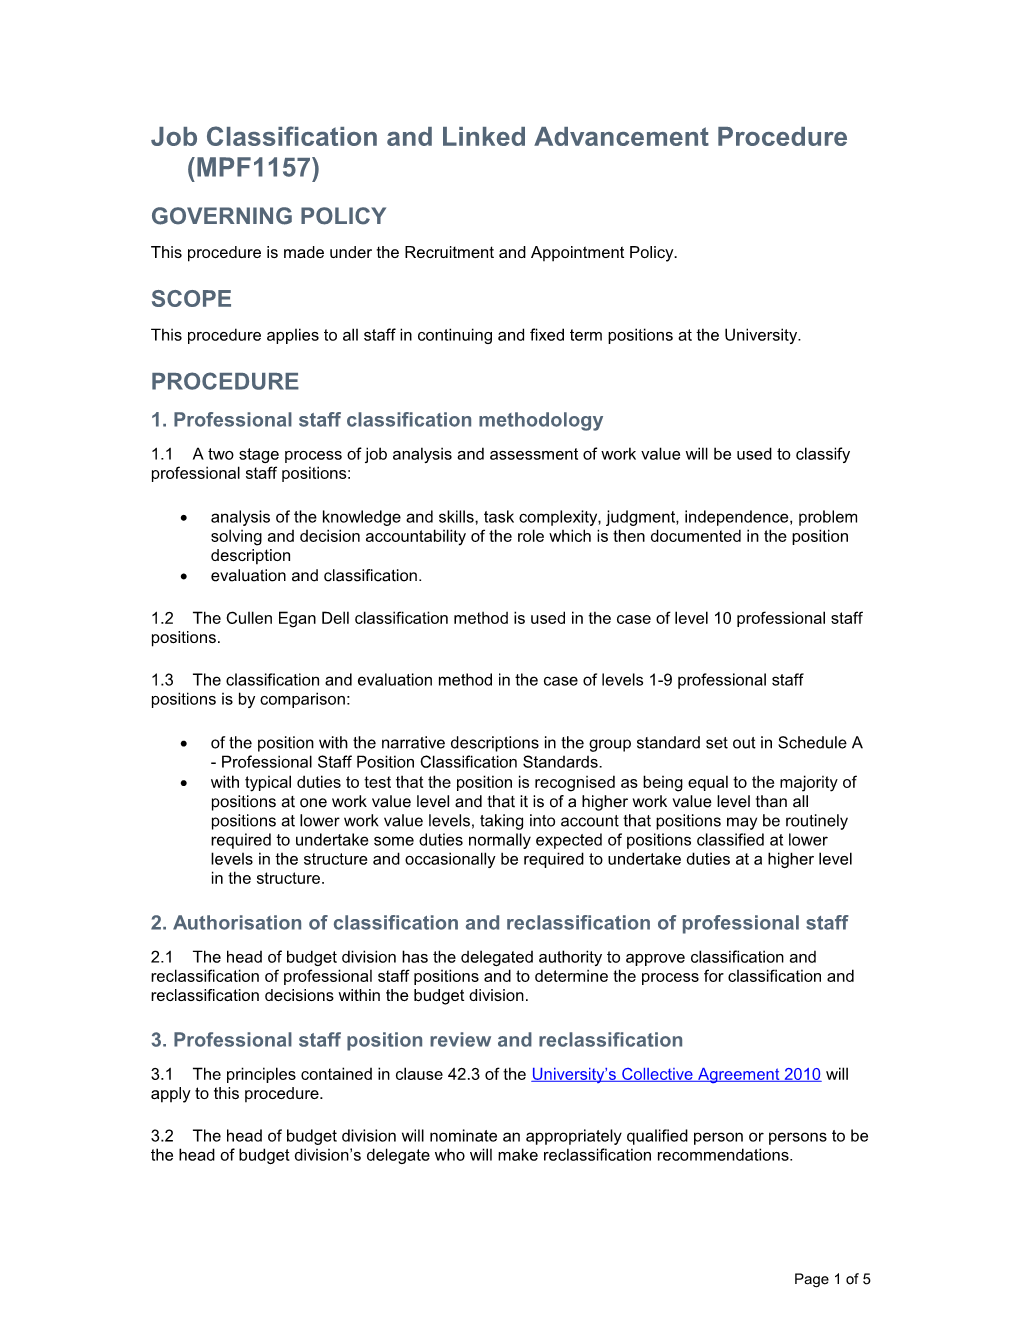 Job Classification and Linked Advancement Procedure (MPF1157)